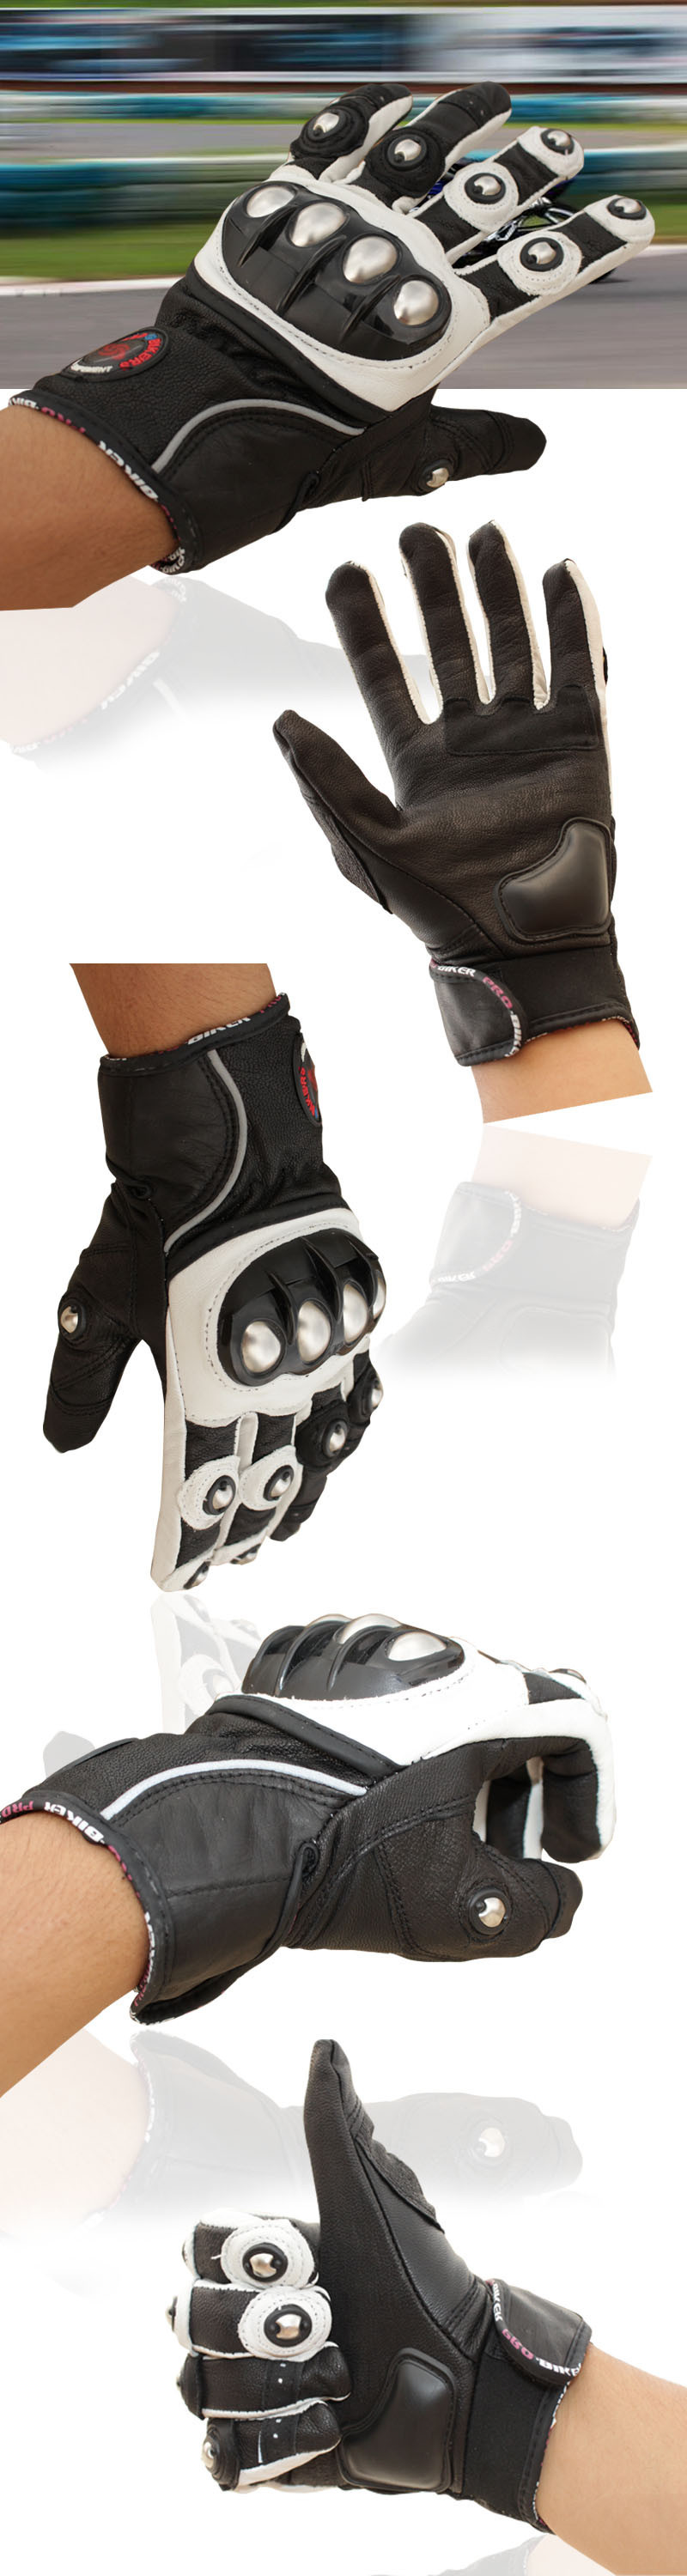 motorcycle gloves detail white